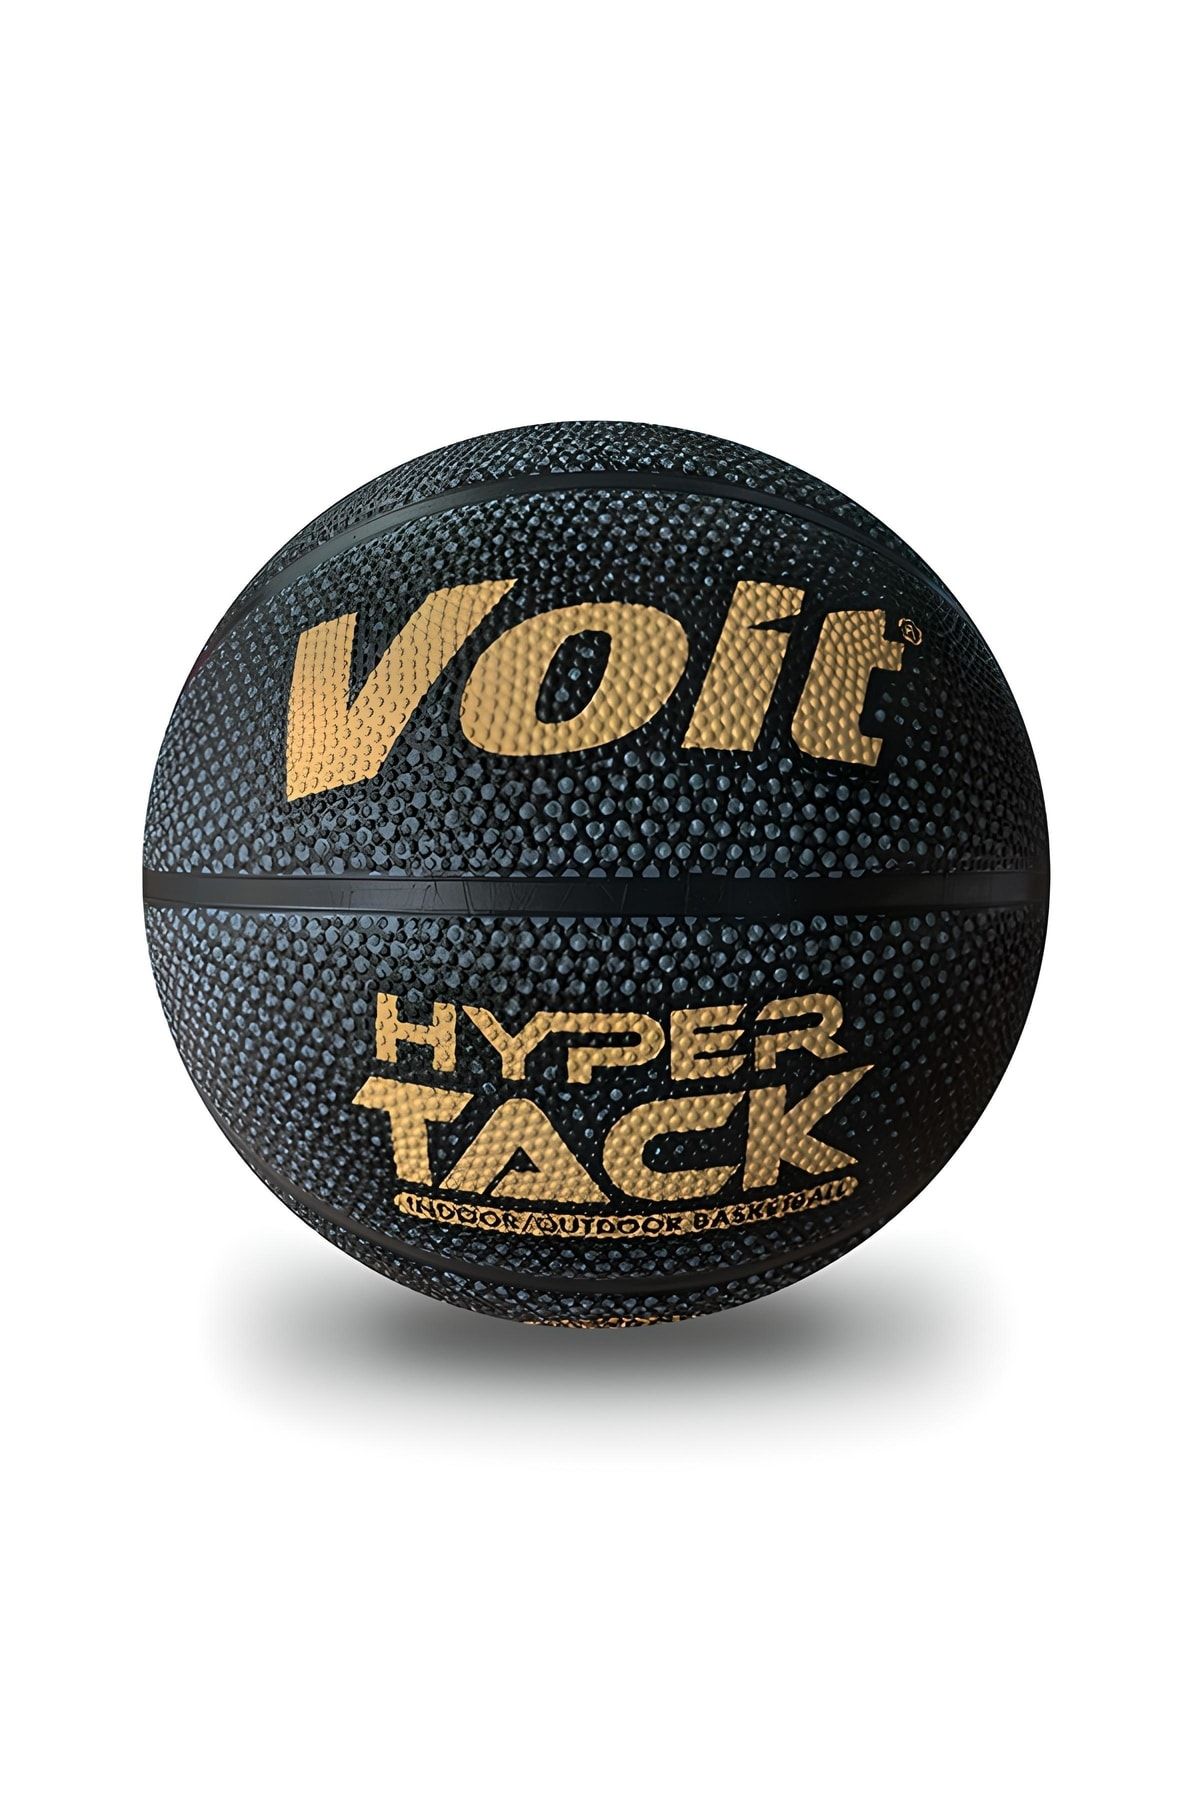 Voit Hyper Tack Basketbol Topu